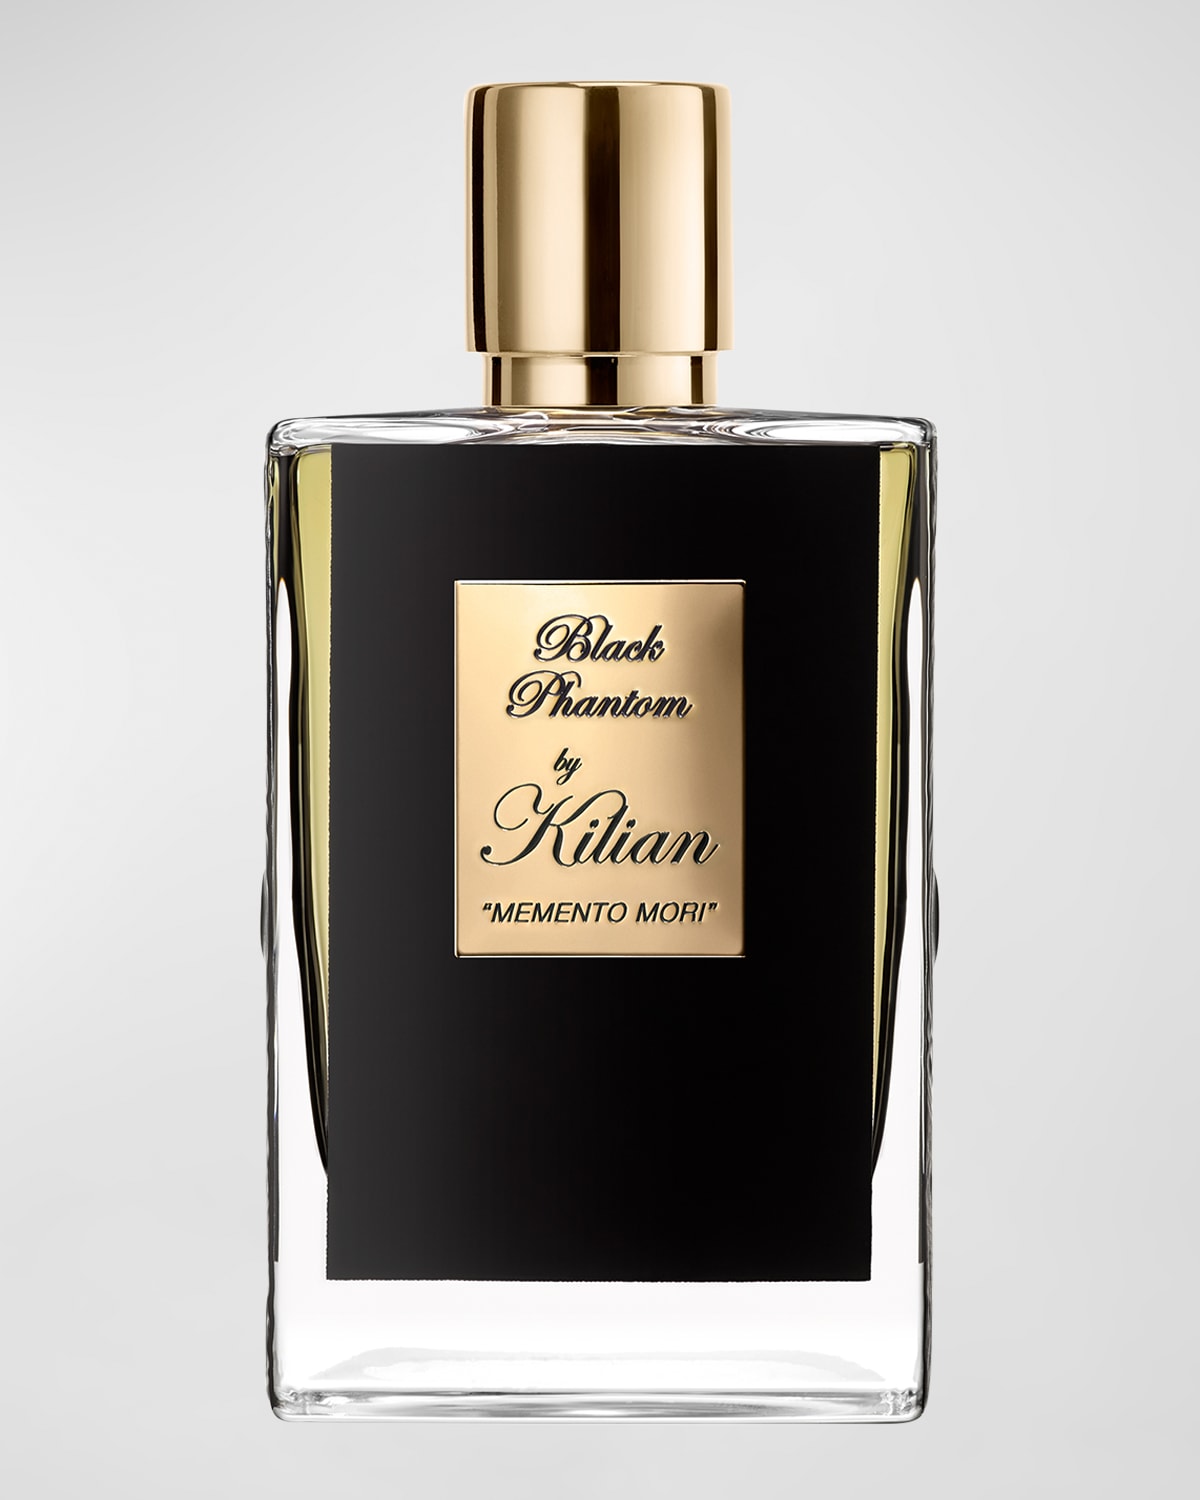 Kilian Black Phantom Eau de Parfum, 1.7 oz./ 50 mL